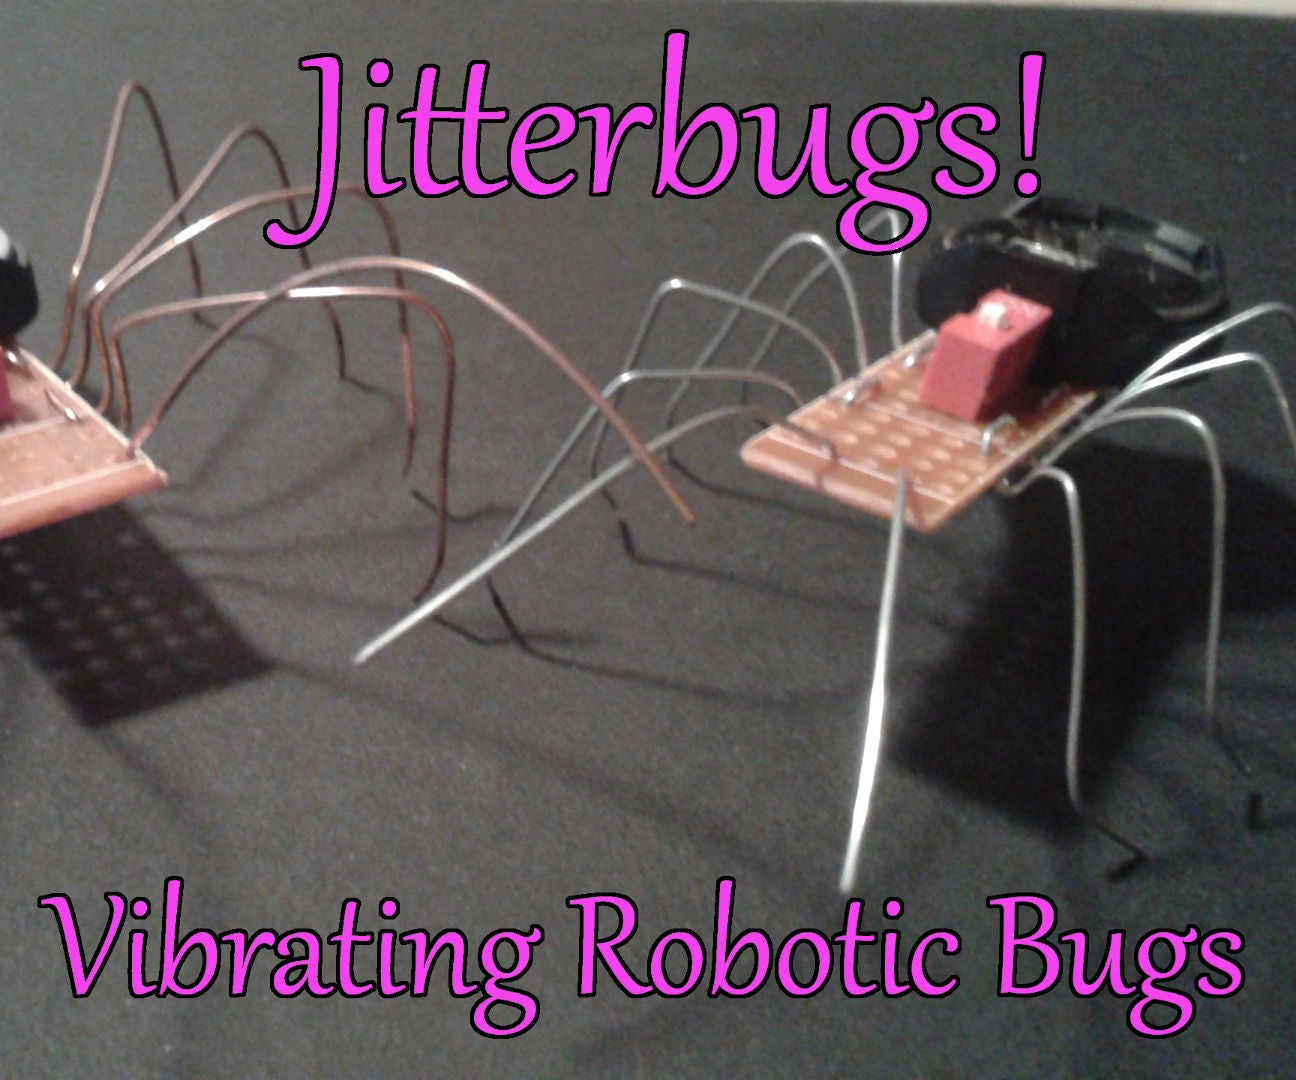 Jitterbugs! Vibrating Robotic Bugs